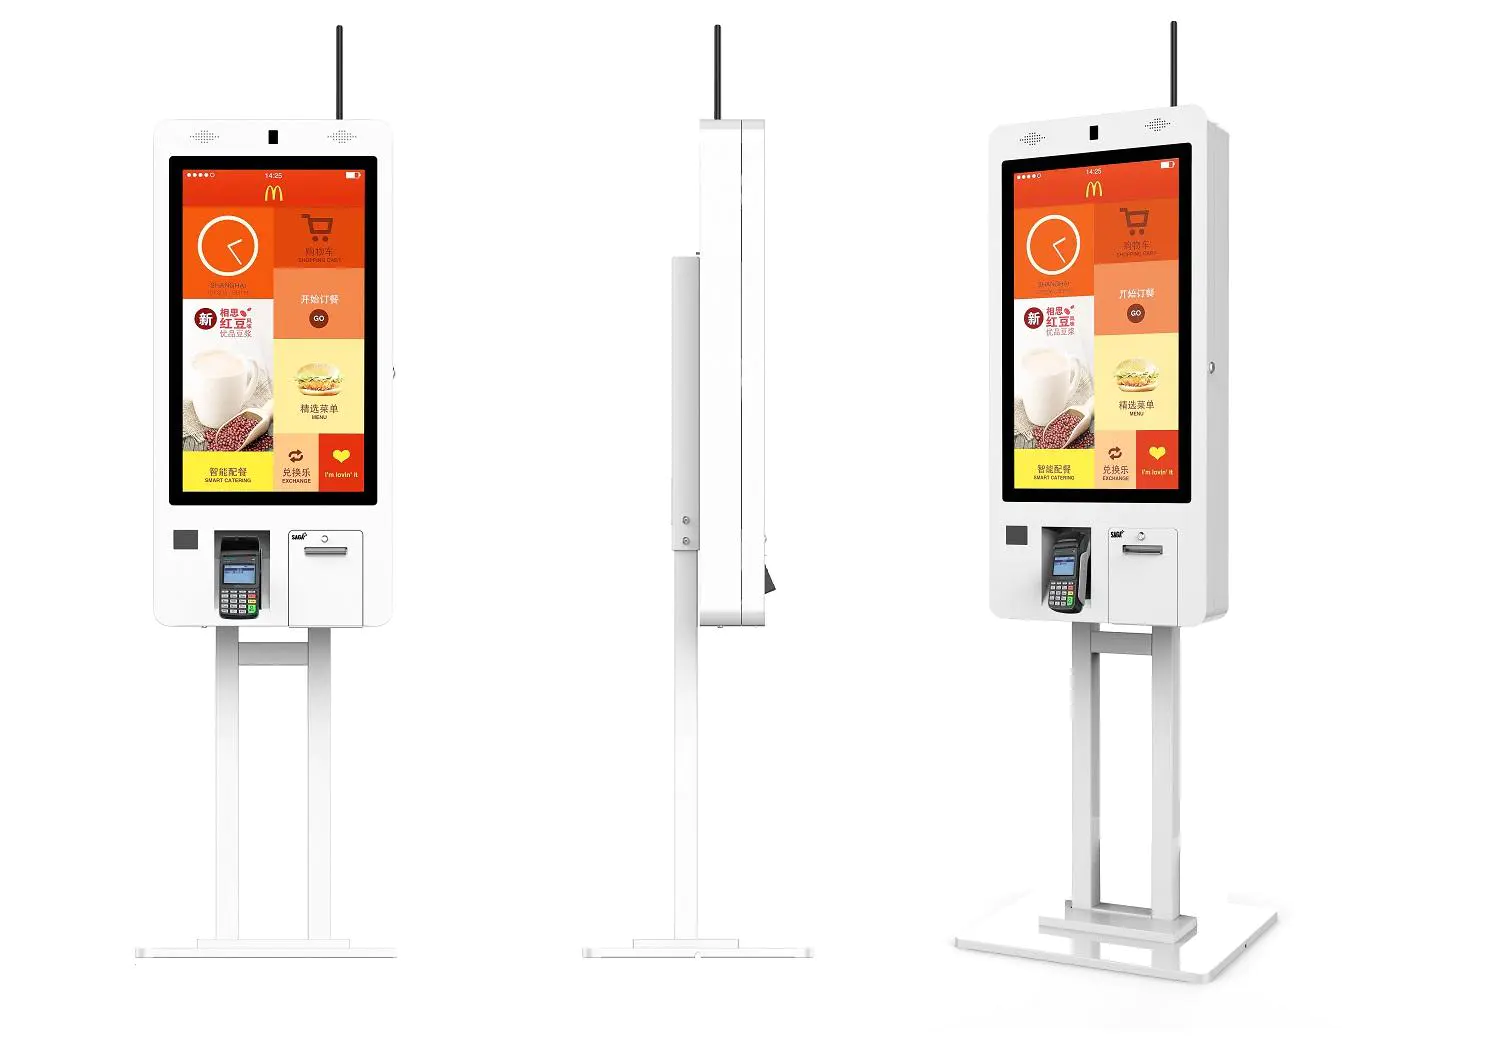 Mcdonald self ordering kiosk, with touch screen, printer, QR code scanner, speaker, pos terminal